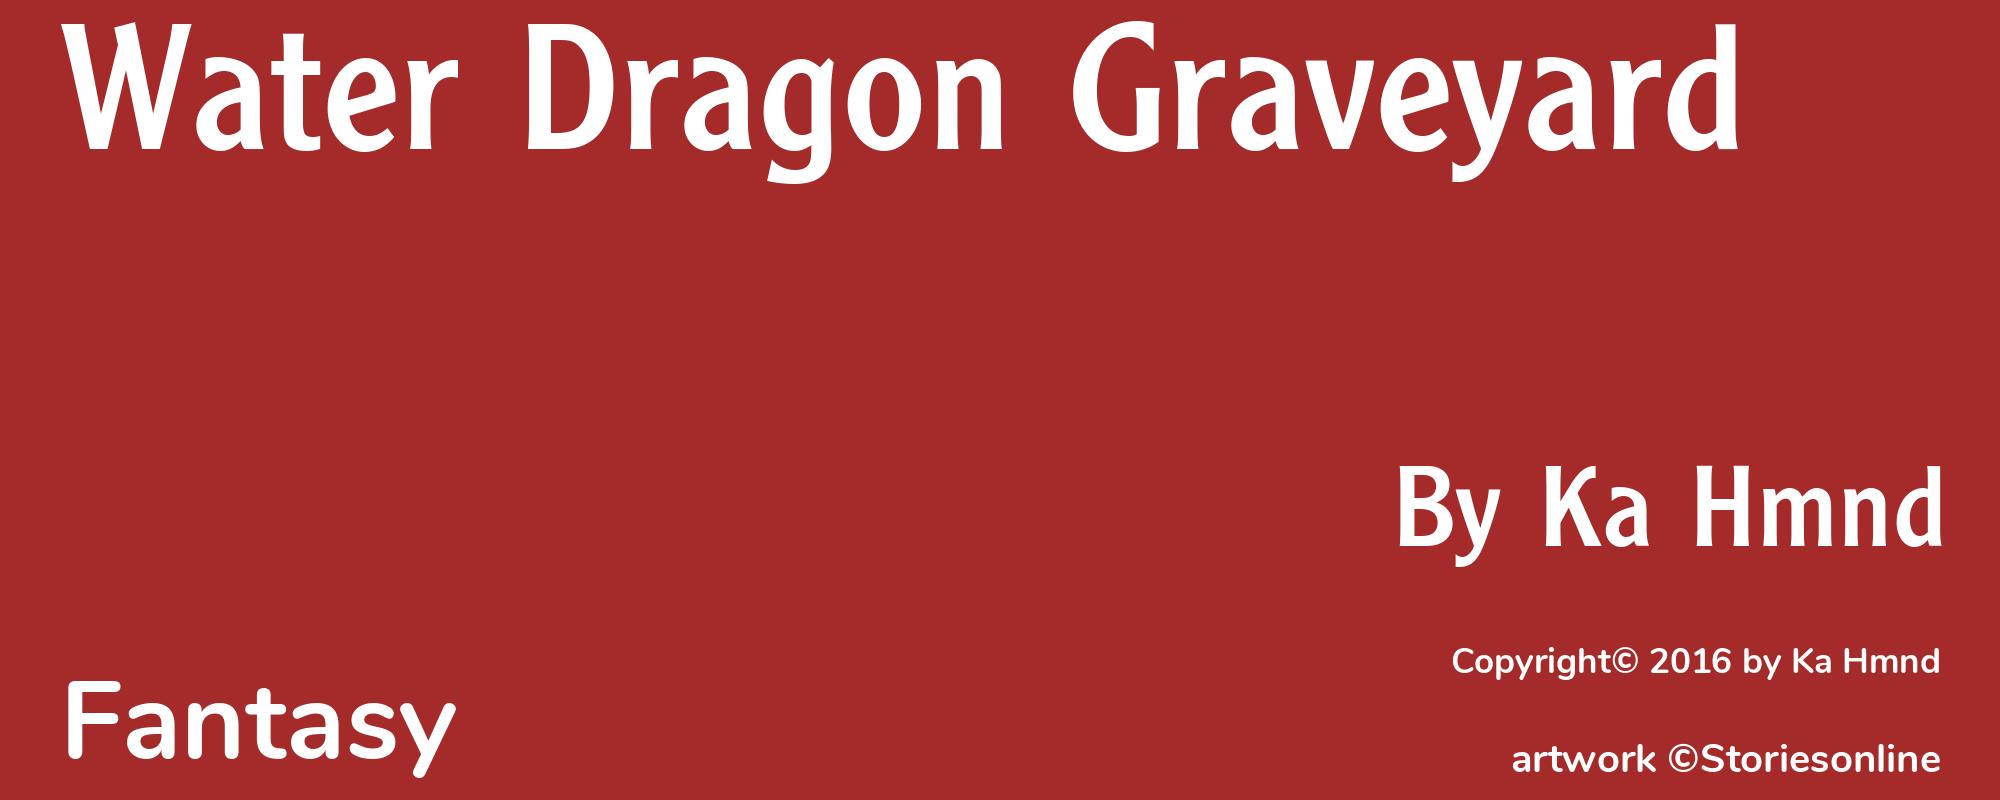 Water Dragon Graveyard - Cover